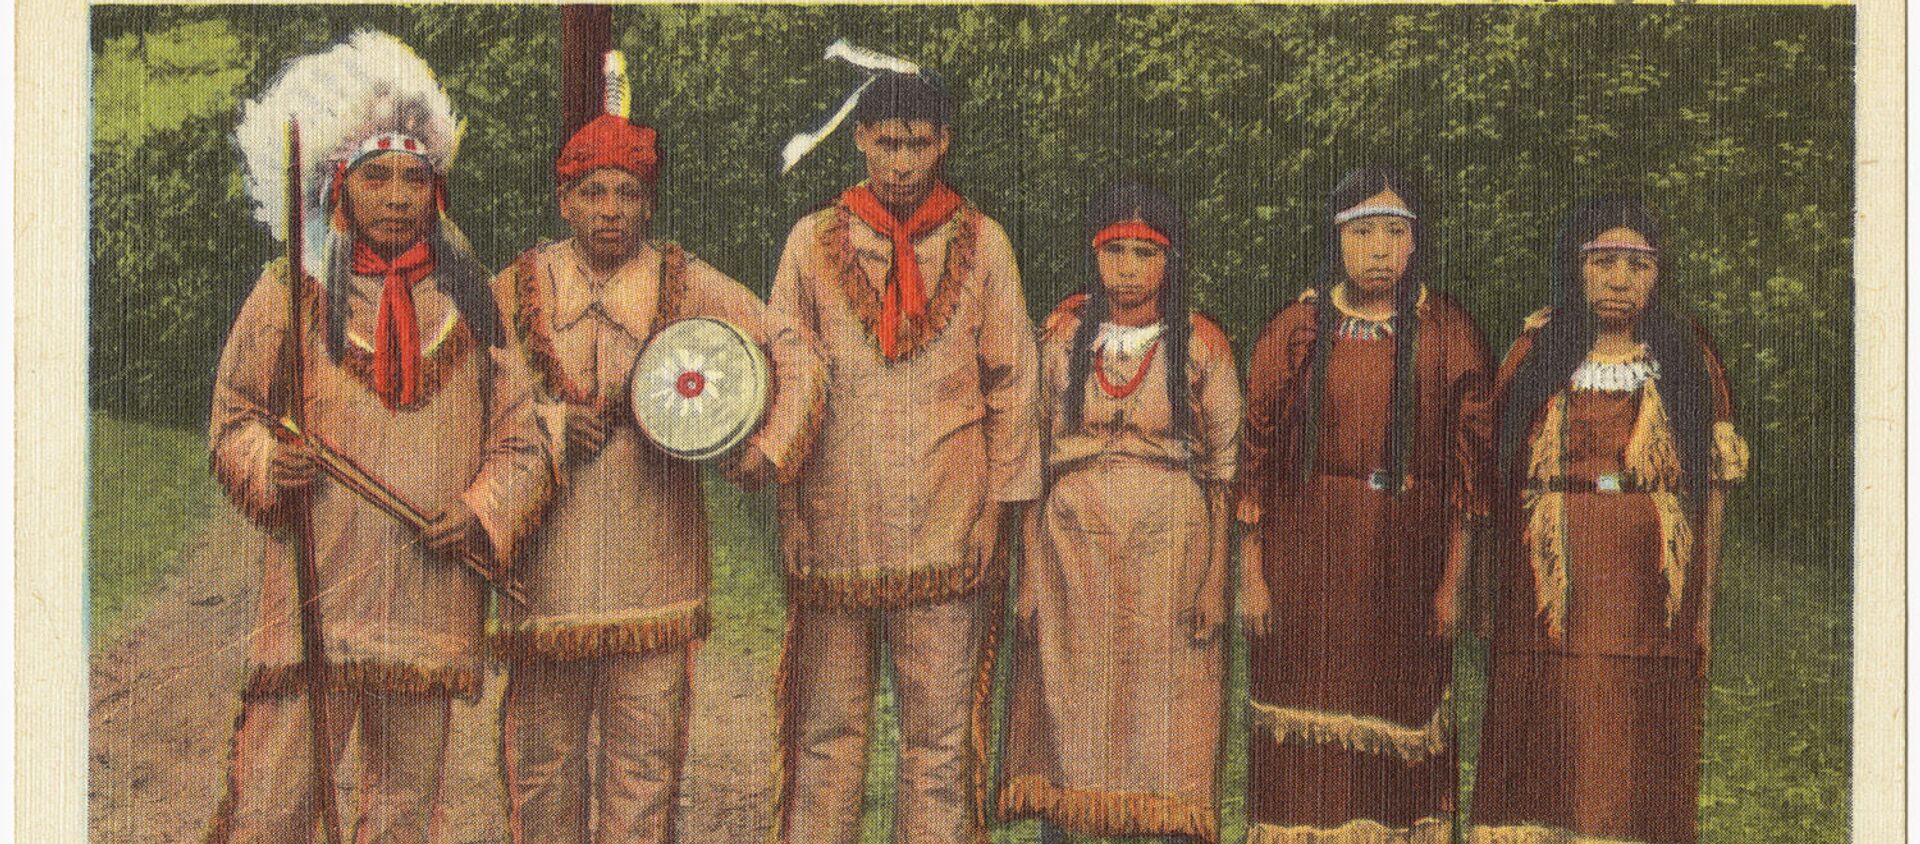 Cherokees (1930 - 1945) - Sputnik Mundo, 1920, 21.12.2020